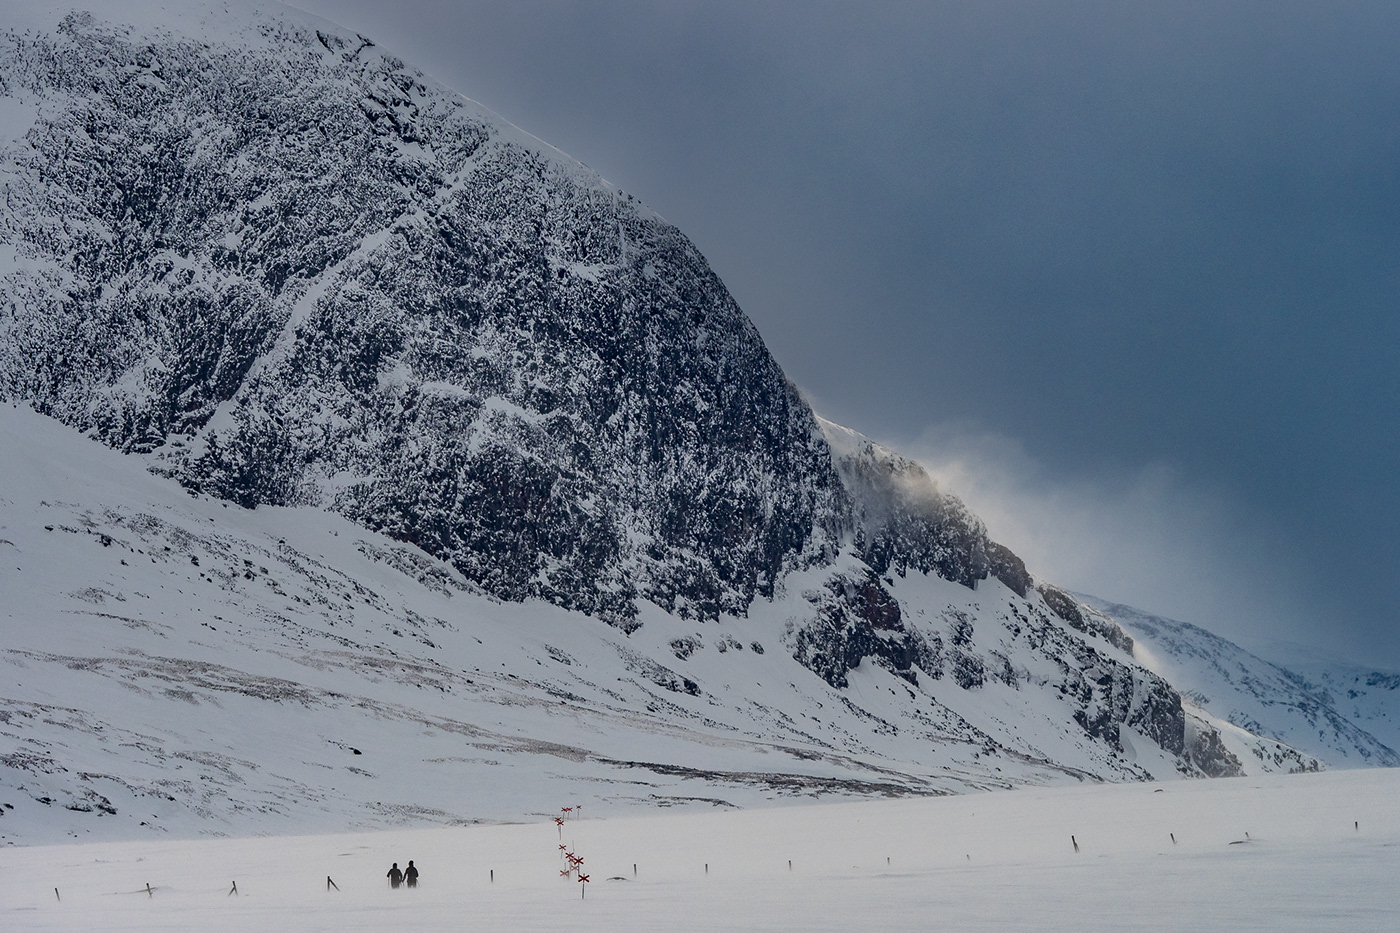 adventure Arctic aurora Cycling epic north snow winter Landscape Photography 